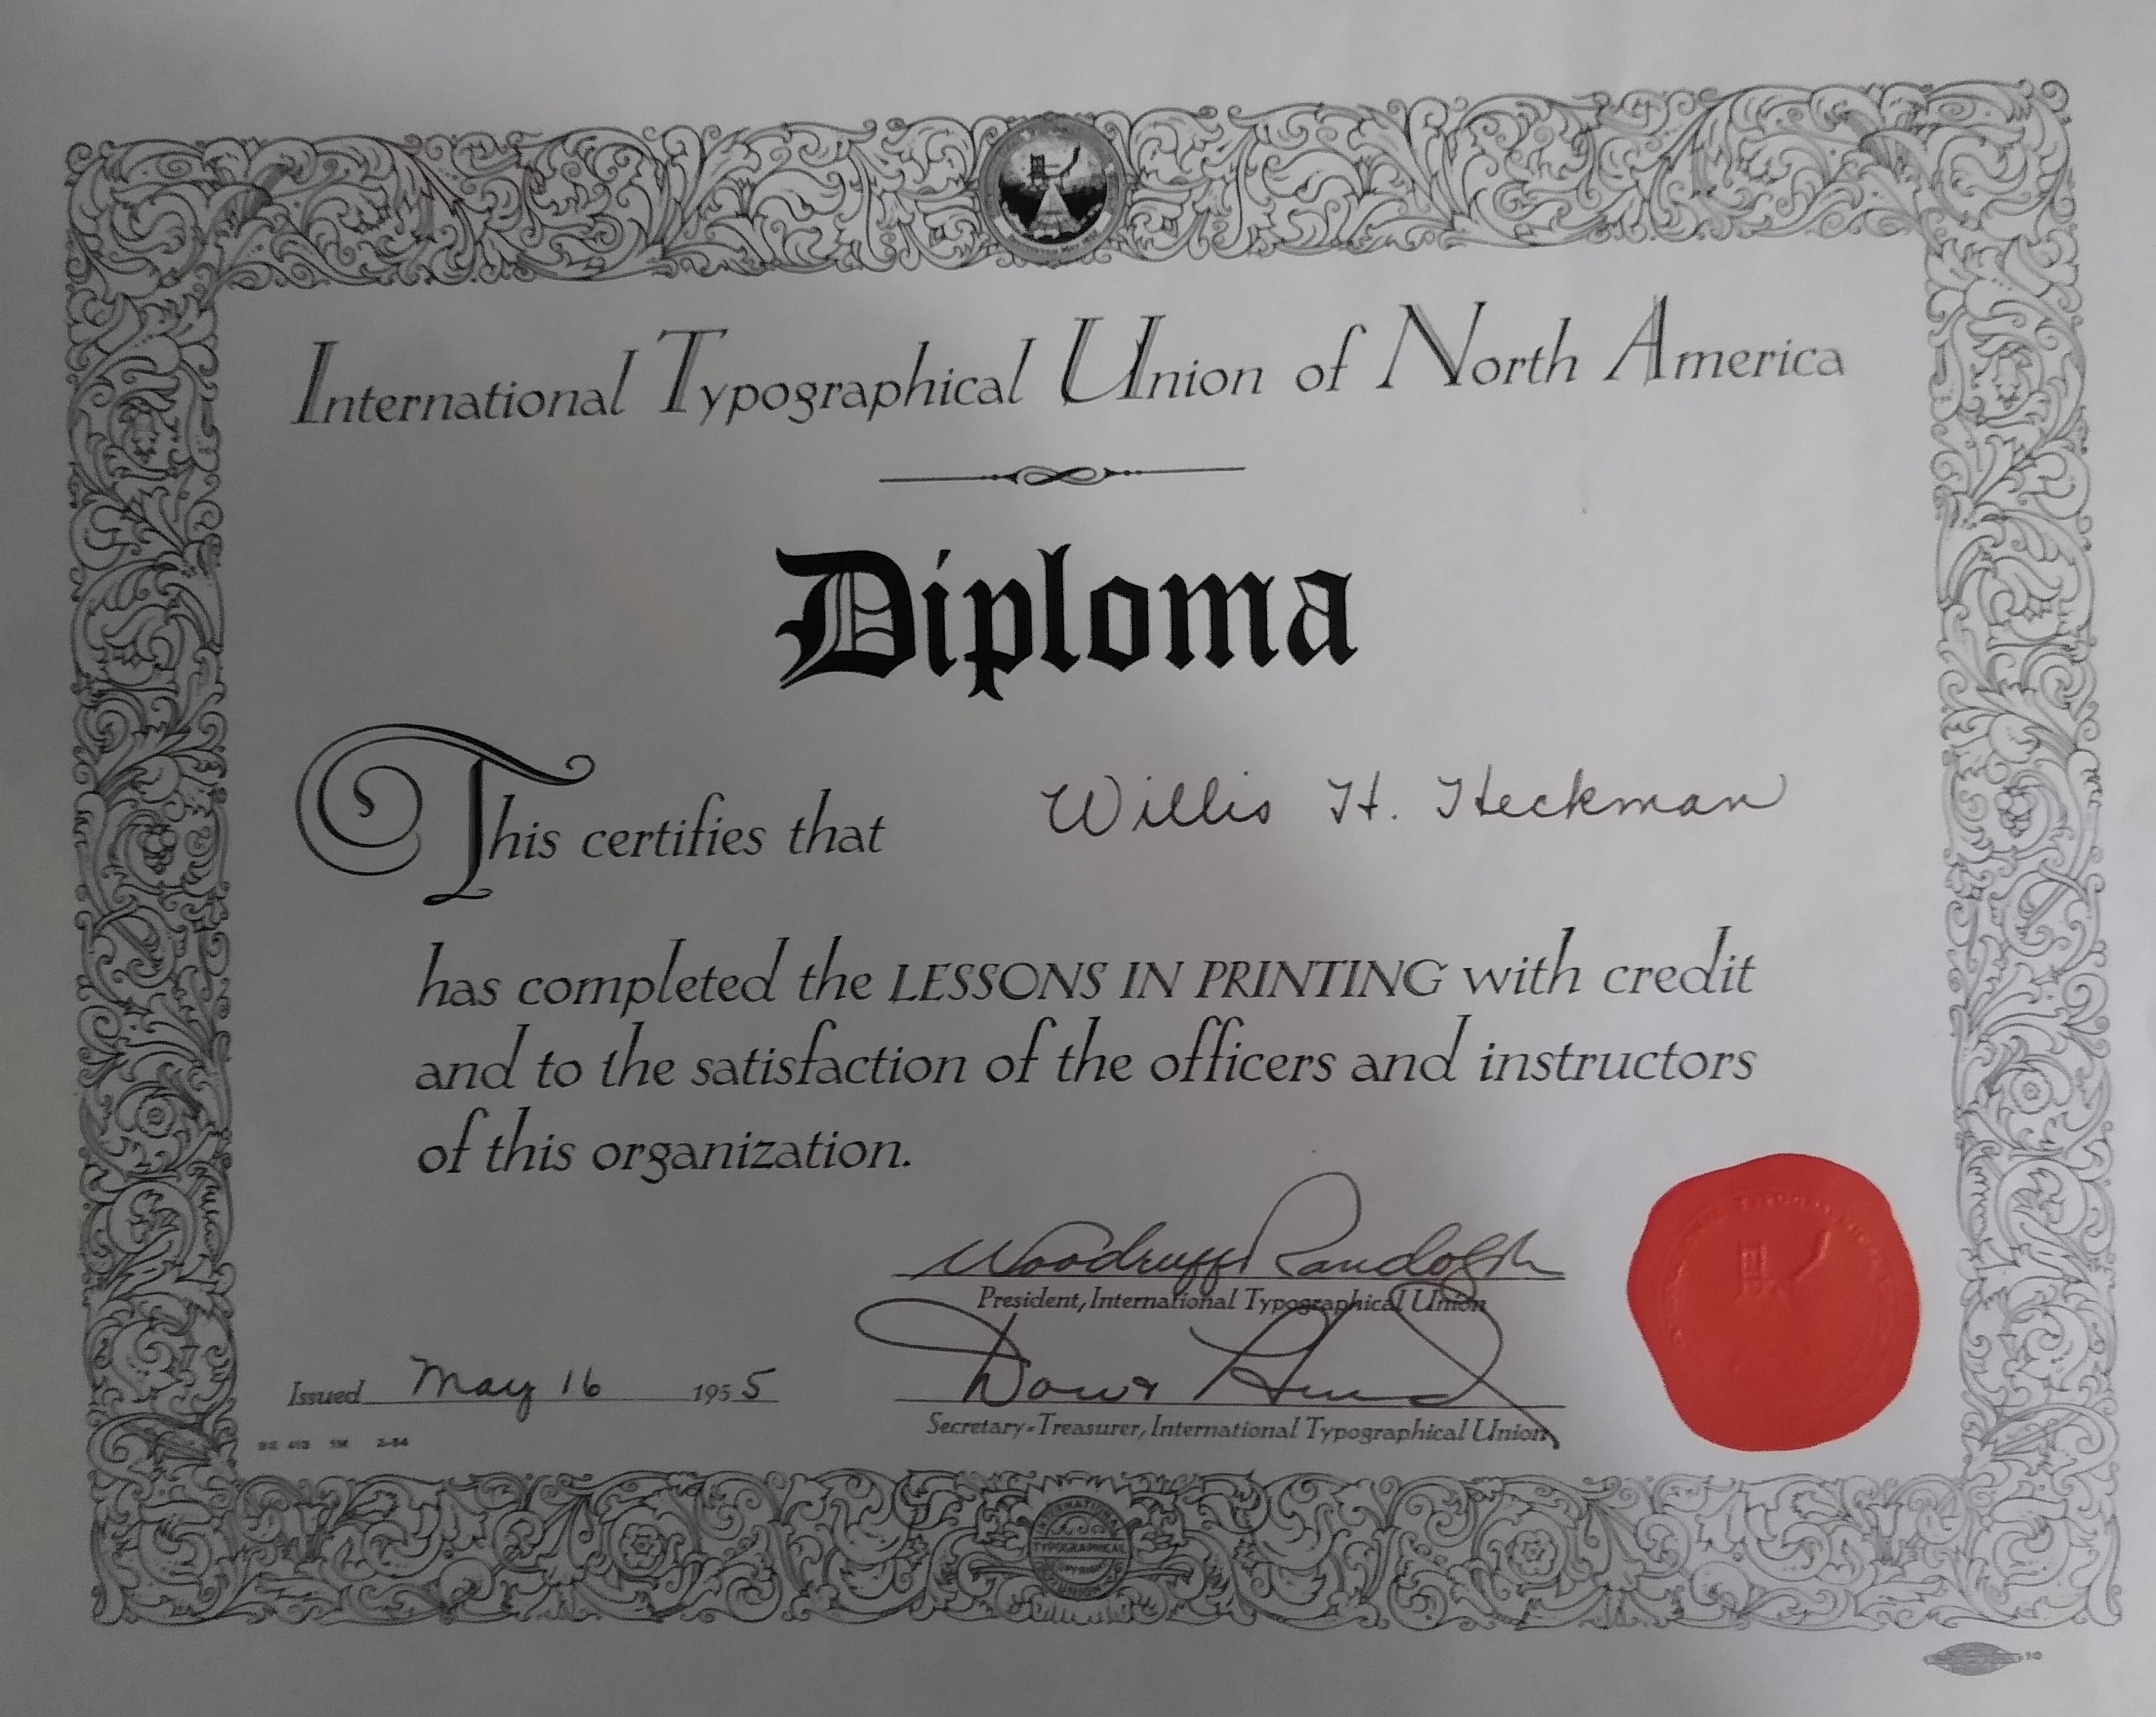 ITC Diploma